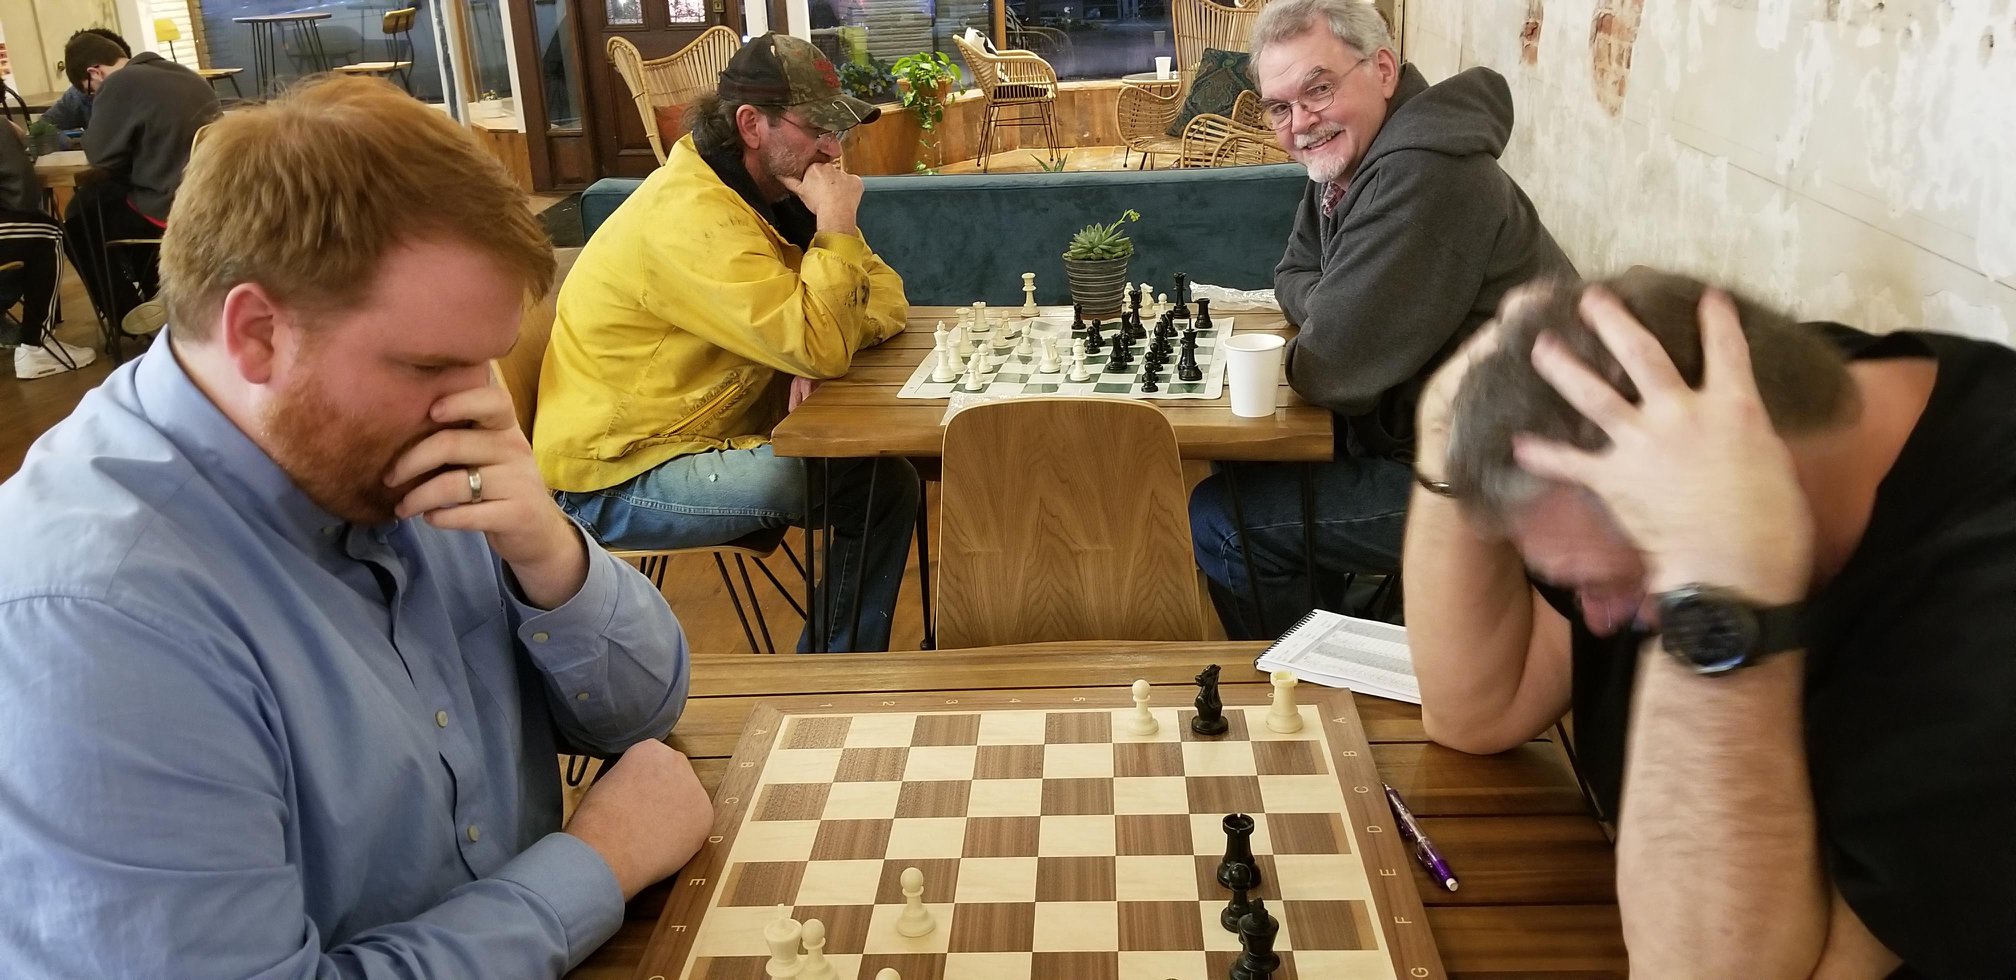 Good times a the Ruston Chess Club.